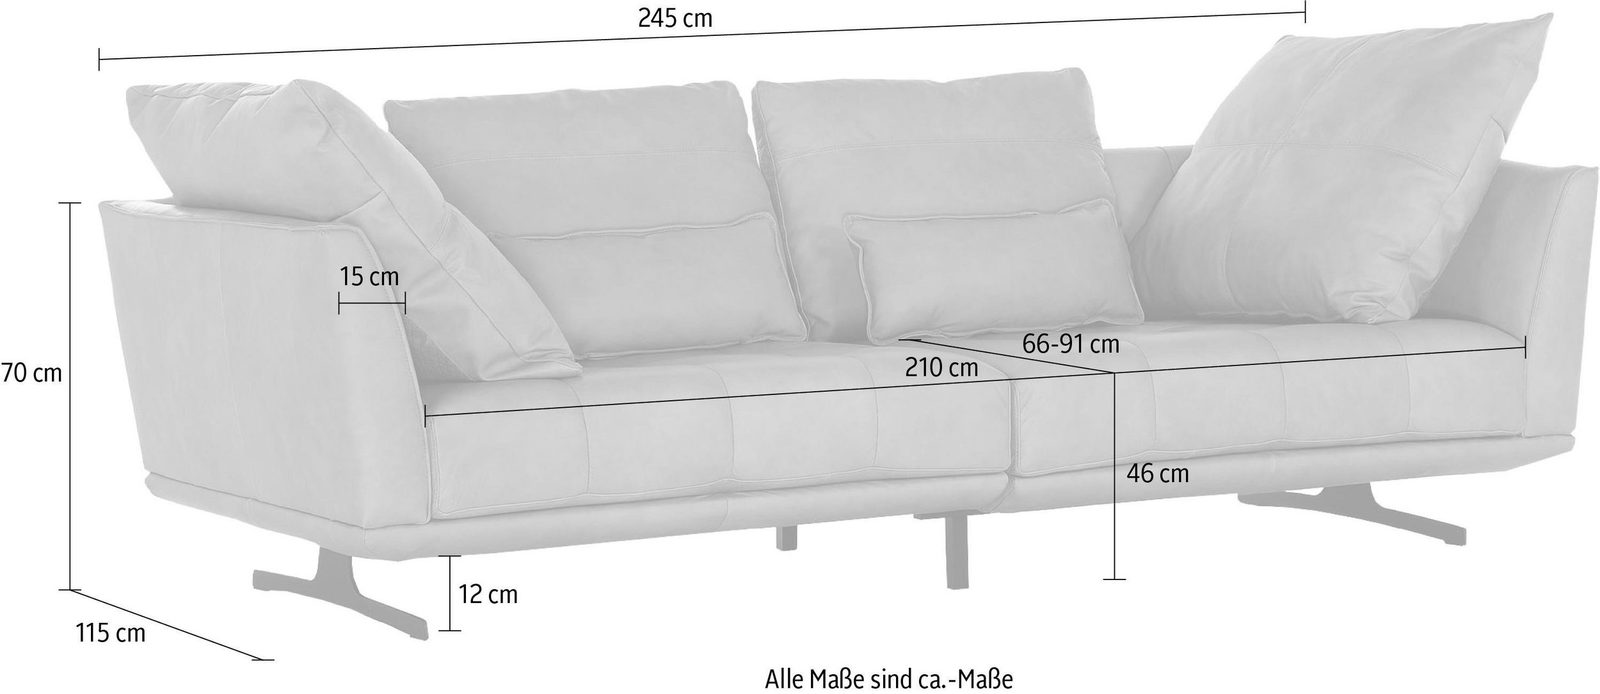 G962 sahara luxusni ko%c5%been%c3%a1 pohovka gutmann factoryplaces of style big sofa one  mit modernen kufenf%c3%bc%c3%9fen naturoo bigsofa ruona  33761842